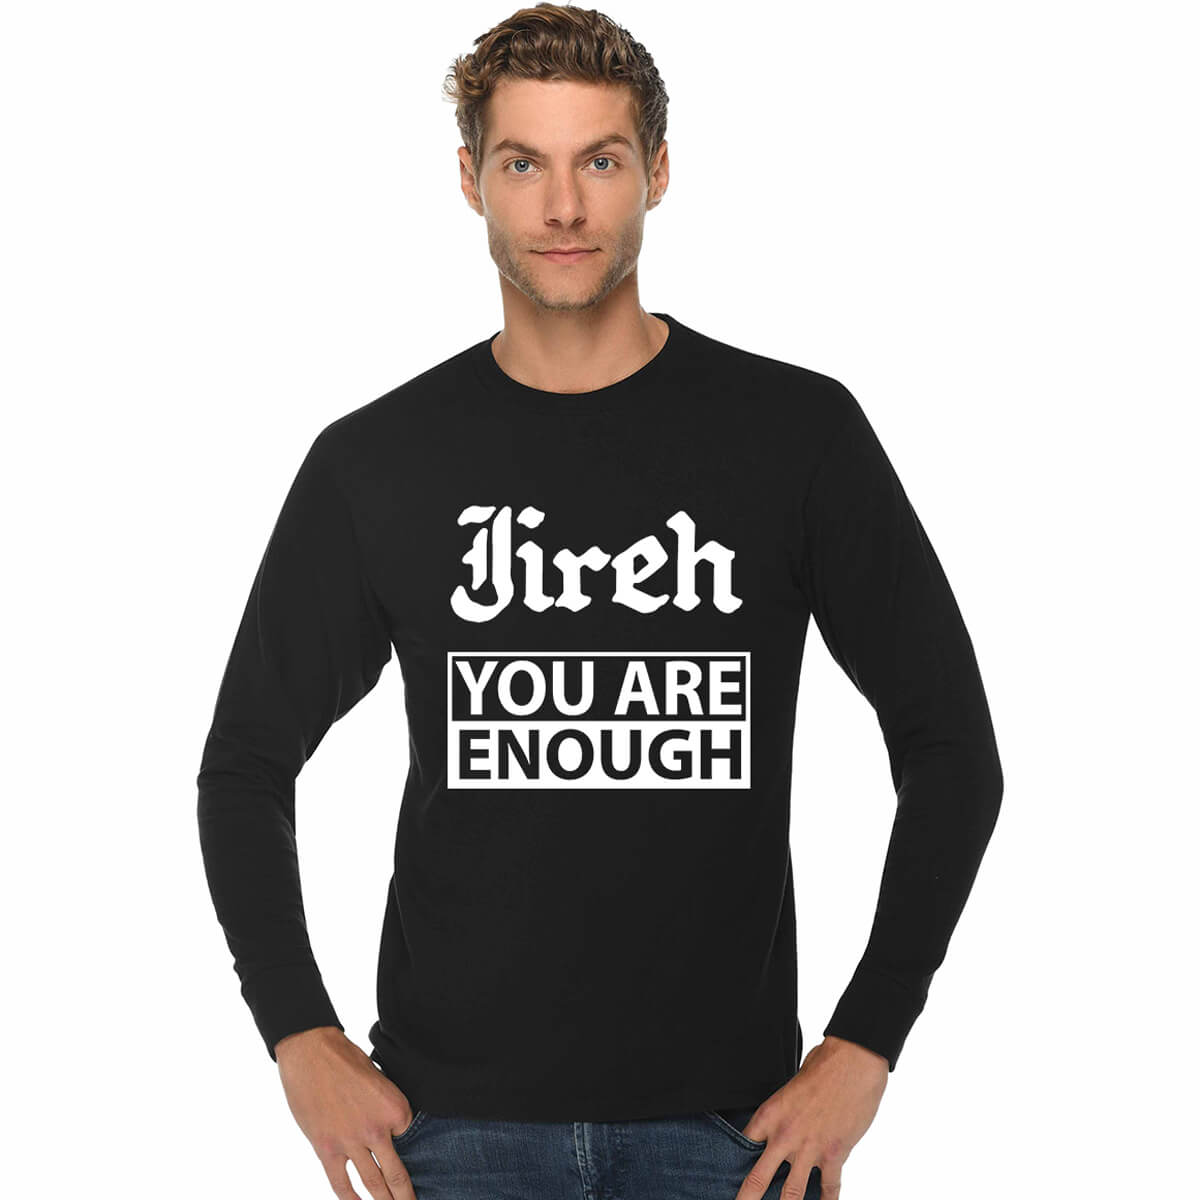 Jireh You Are Enough Men's Long Sleeve T Shirt